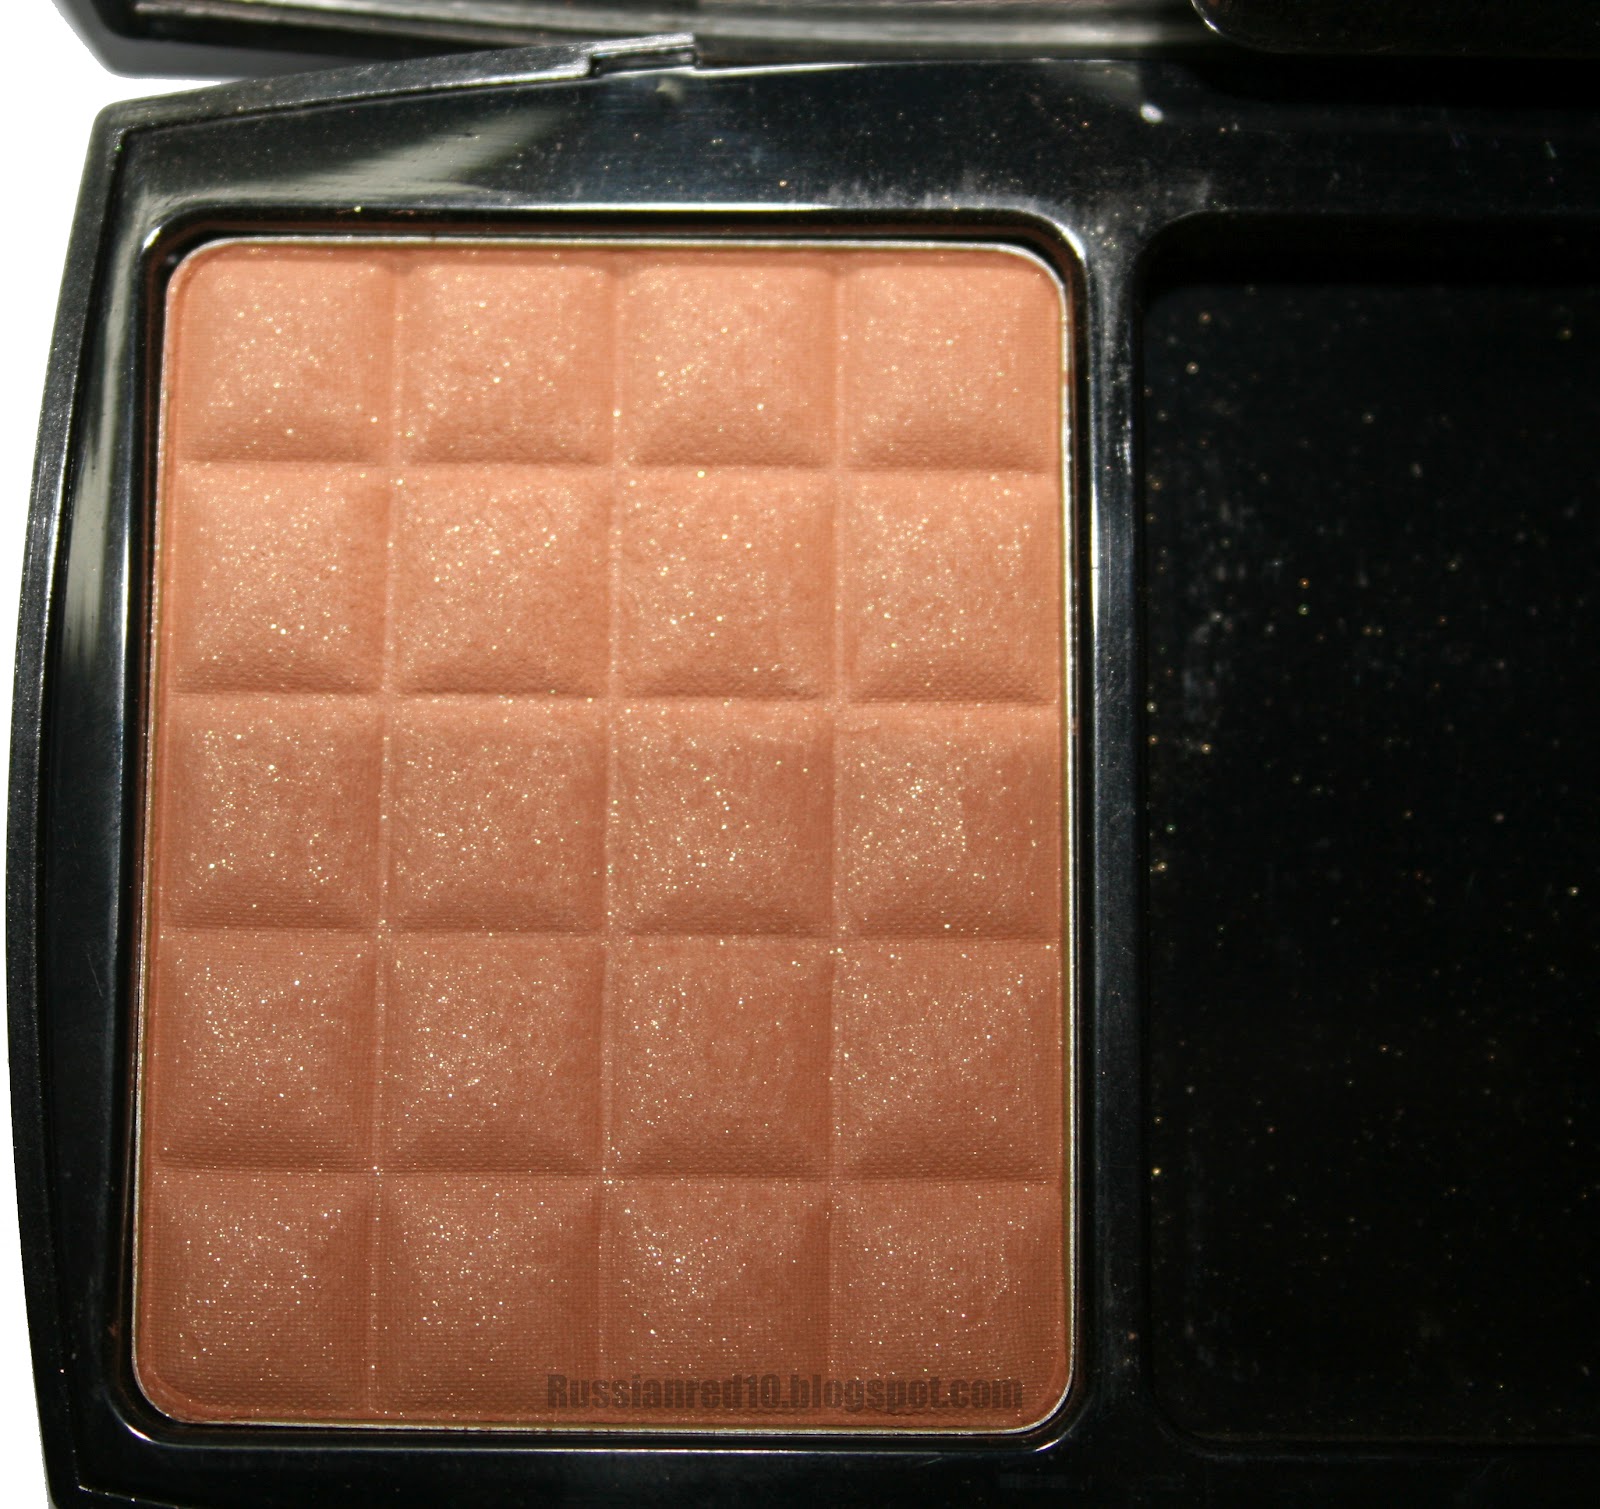 The Face Review: Chanel Irreelle Soleil Silky Bronzing Powder in Sierra 22